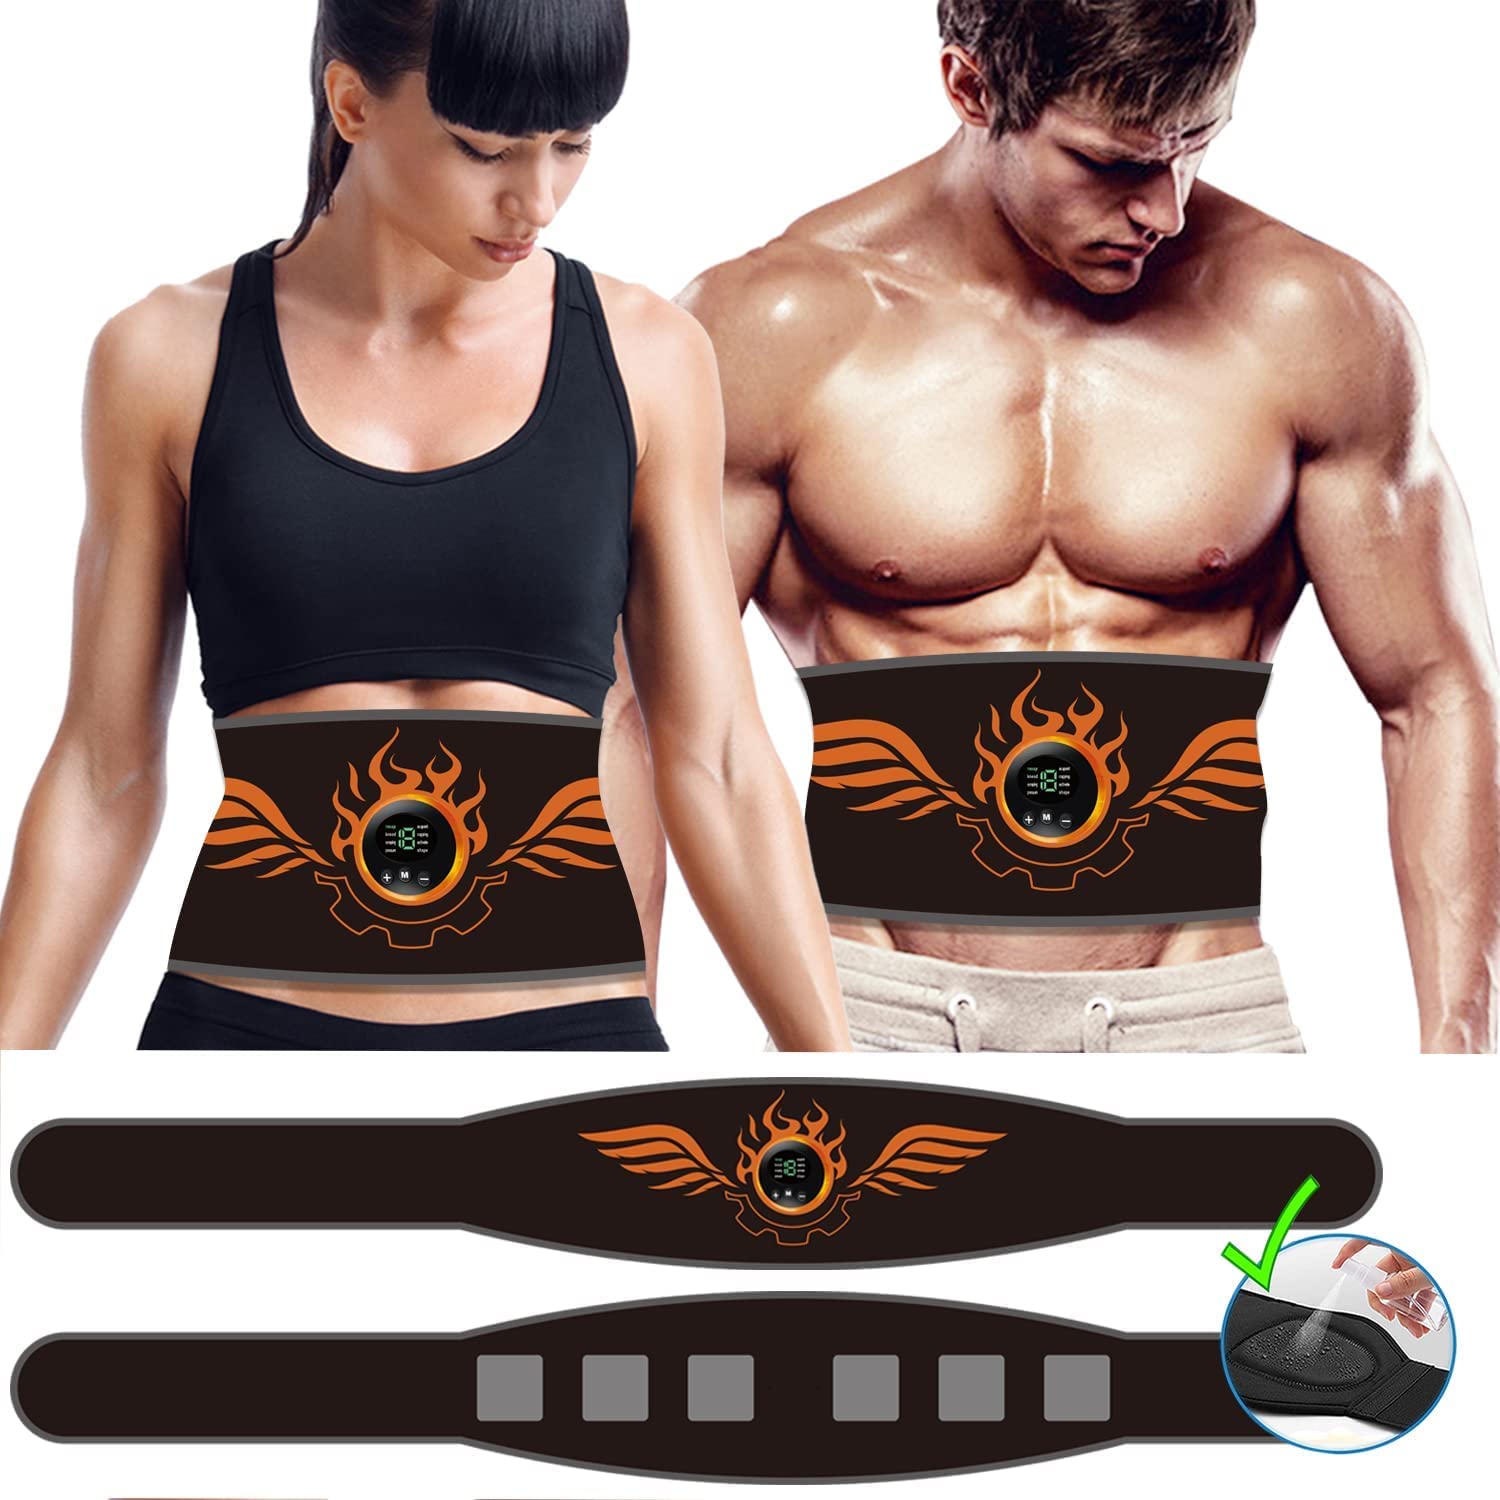 Nowten Abs Stimulator Replacement Gel Sheet Abdominal Toning Belt Muscle Toner  Ab Trainer Accessories Muscle Toner abs Stimulator